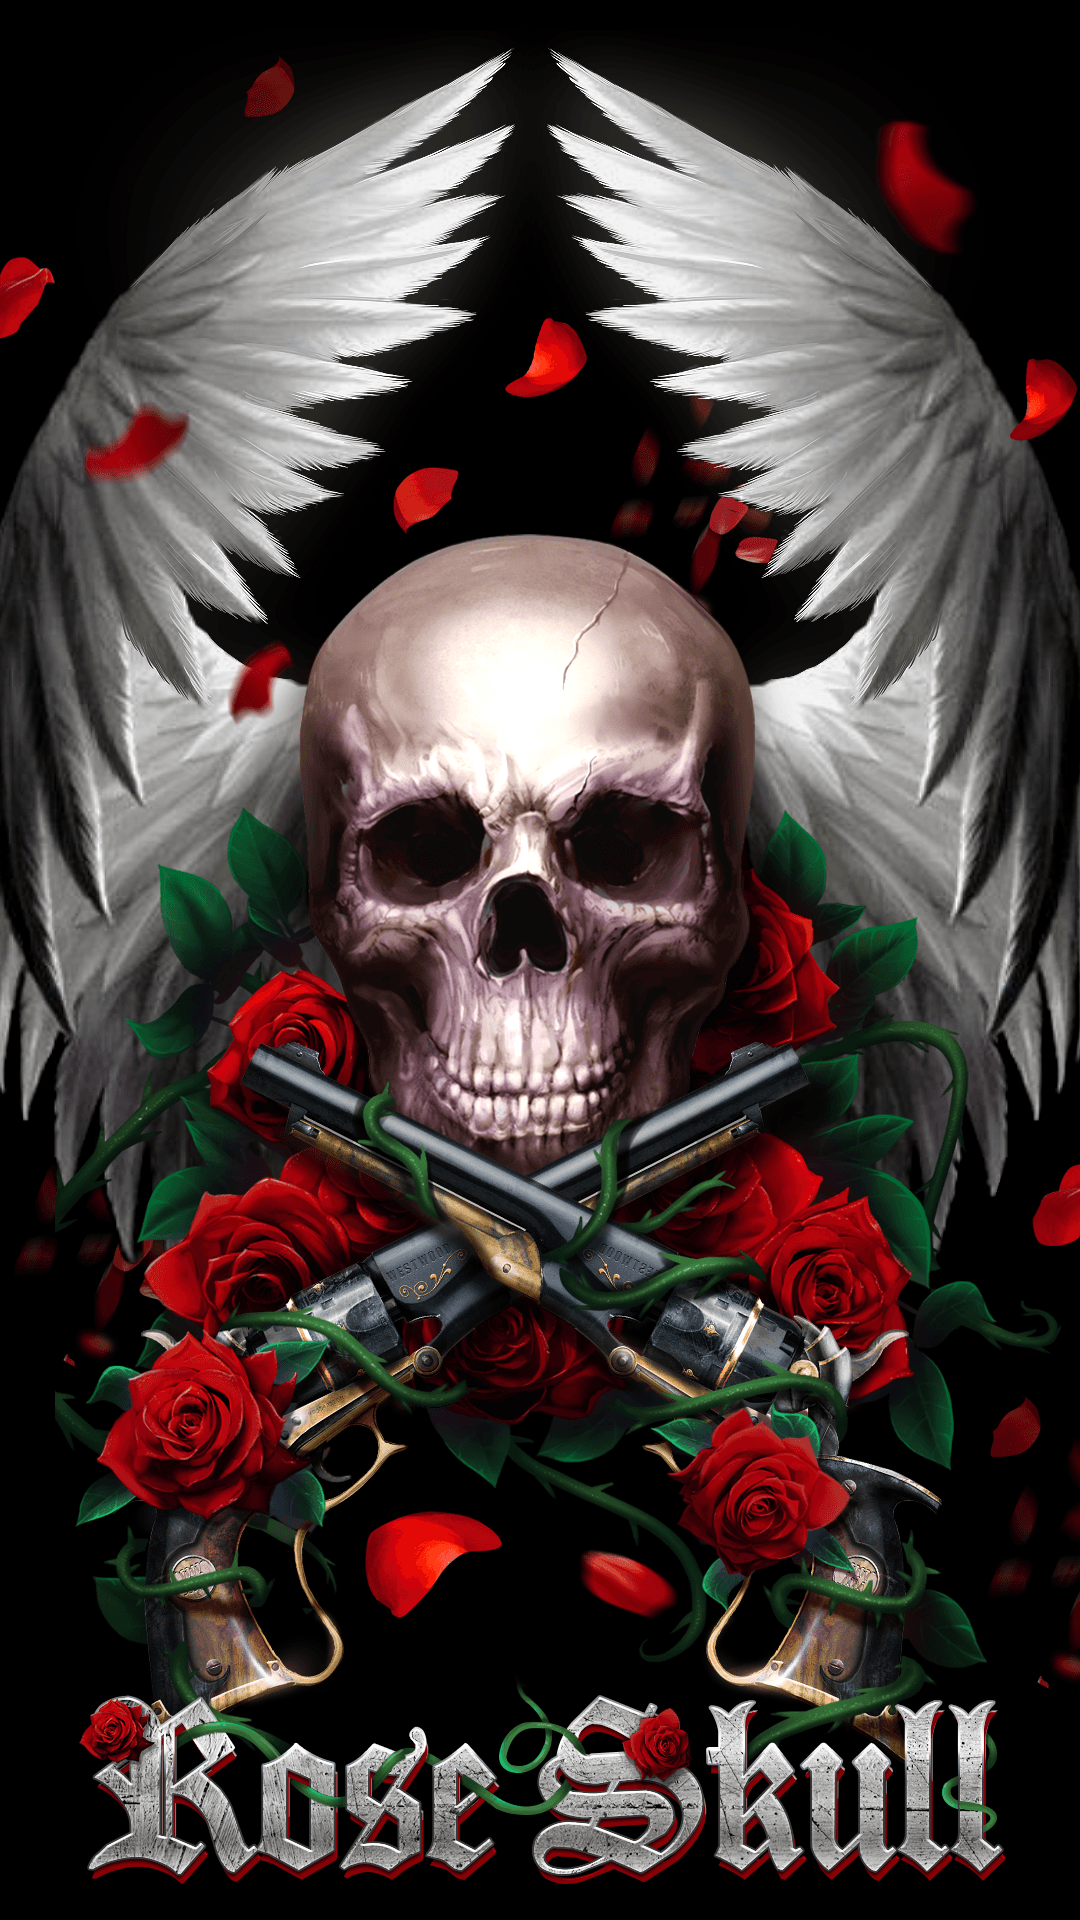 Beautiful rose skull live wallpaper!. Android live wallpaper